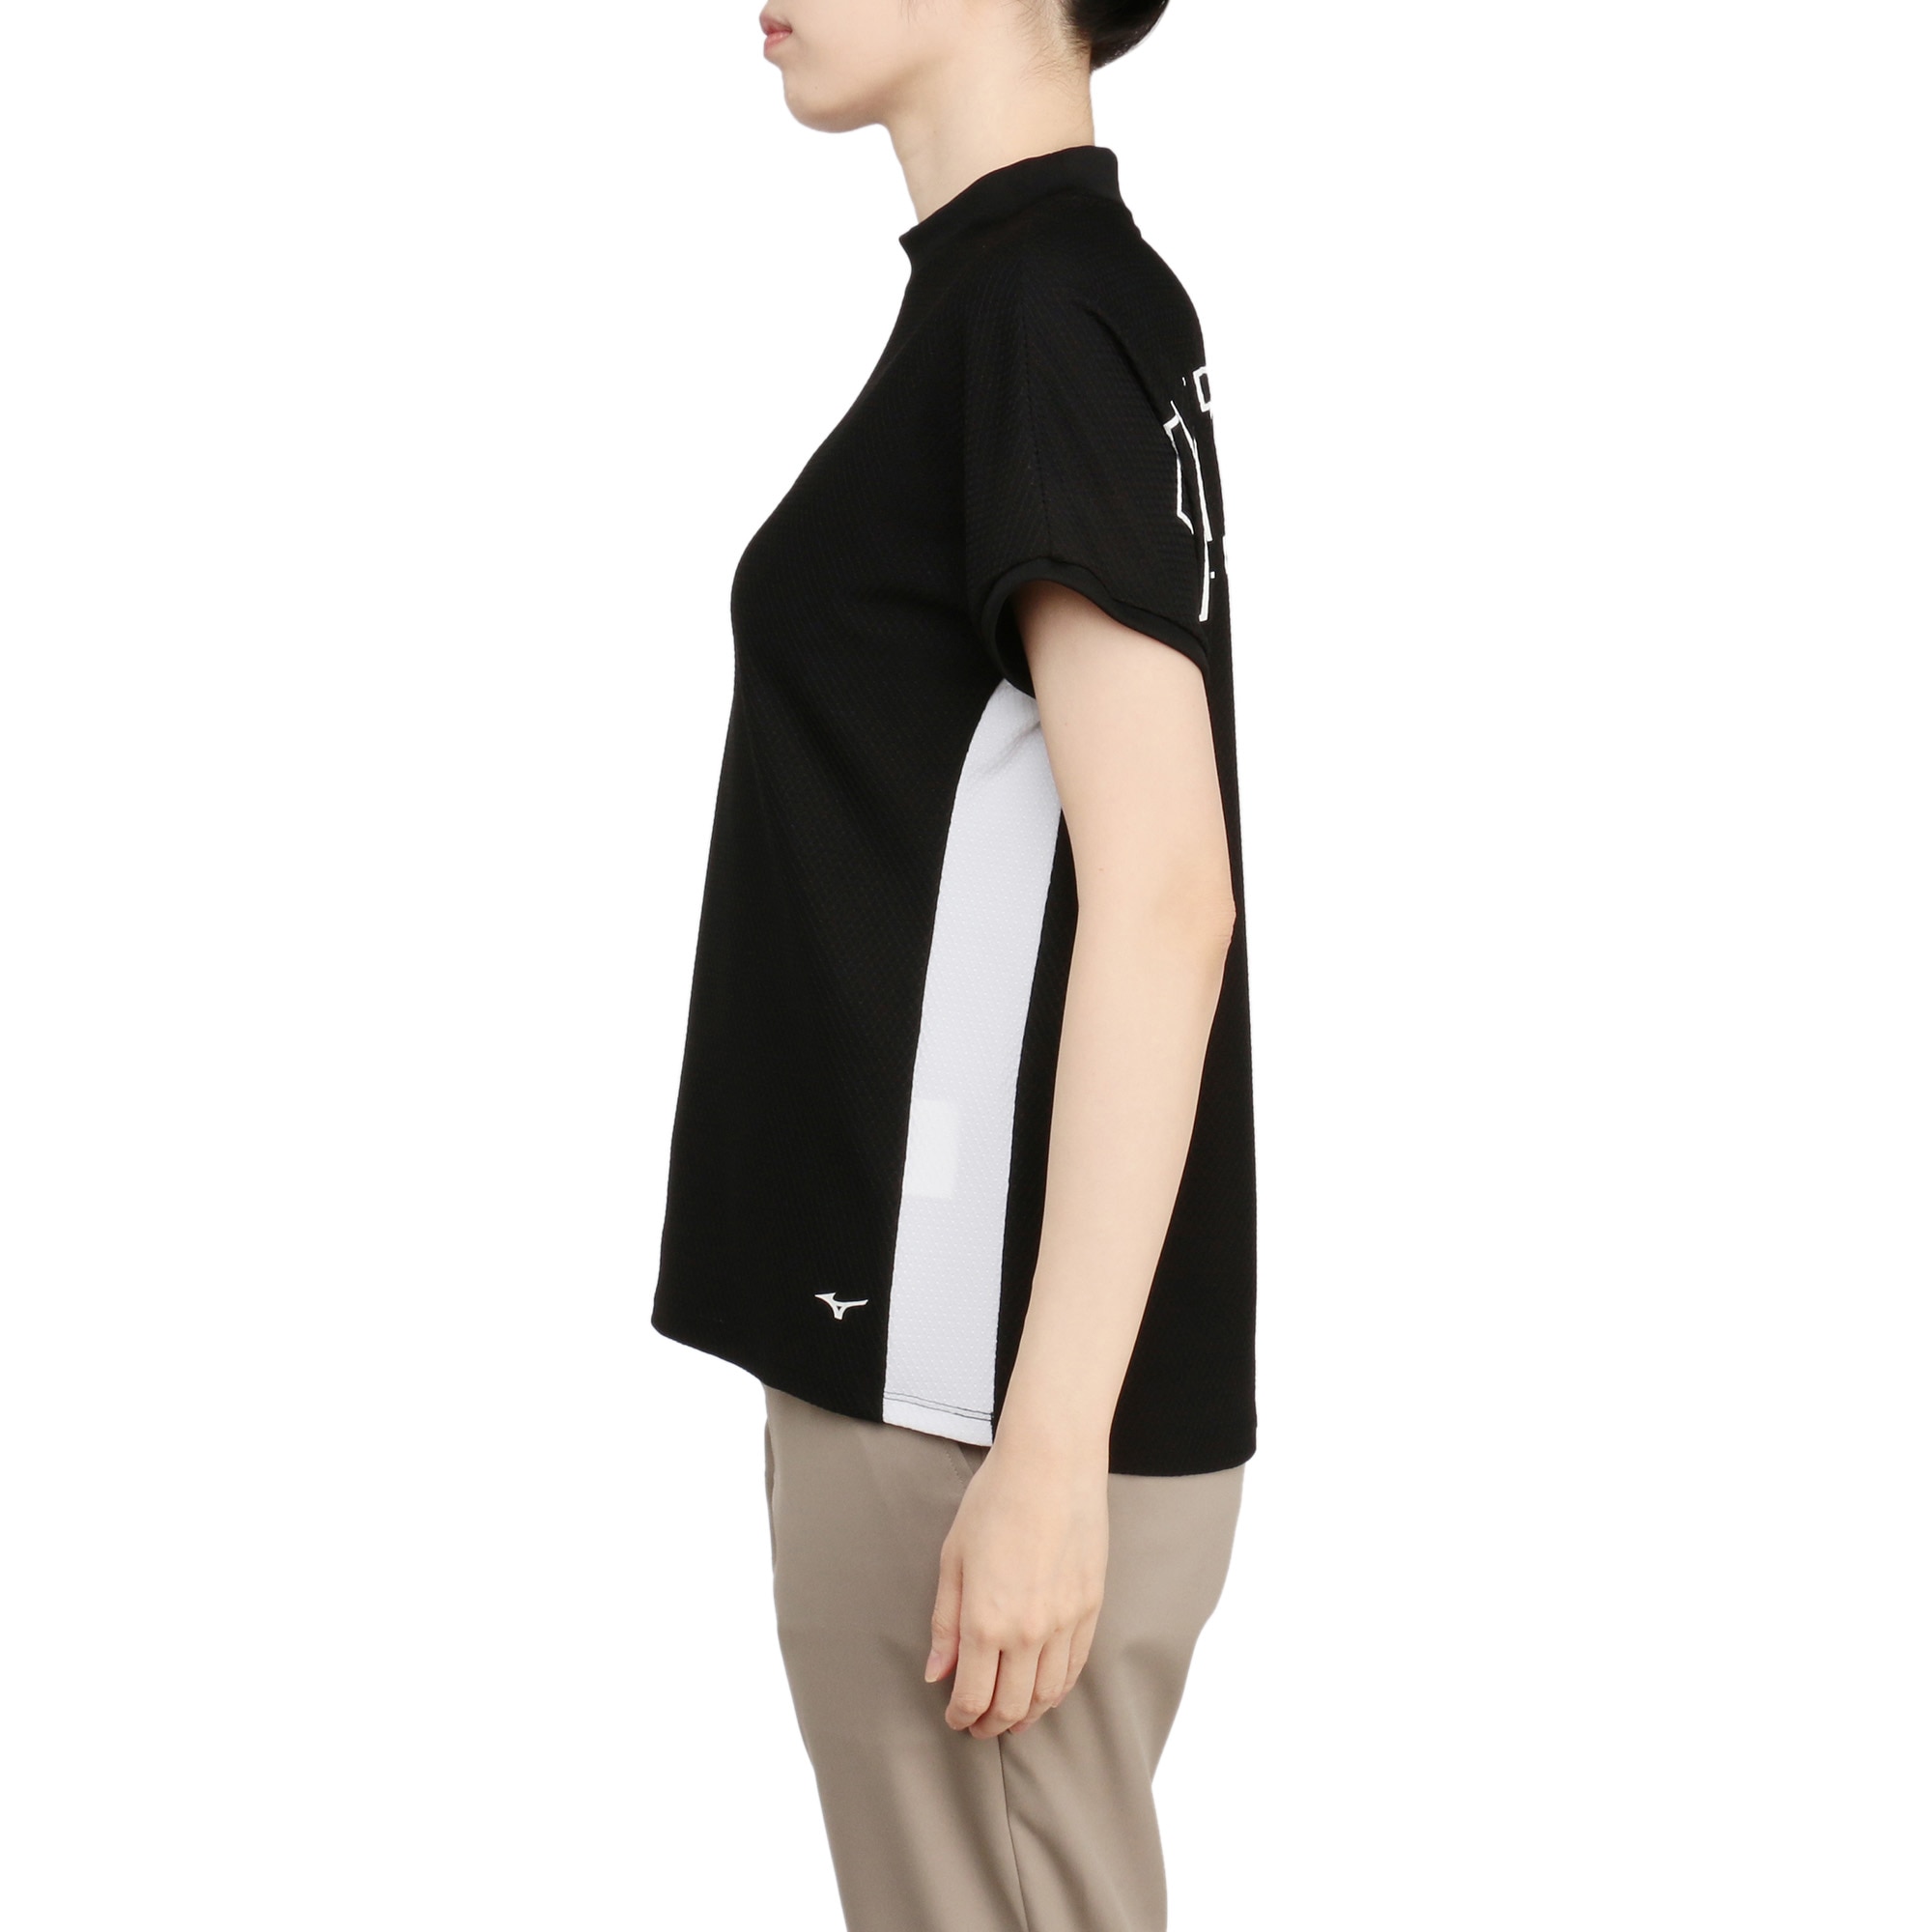 UV MIZUNOロゴモックネック半袖シャツ[ウィメンズ]|E2MAA209|半袖シャツ|ゴルフウエア|ミズノ公式オンライン